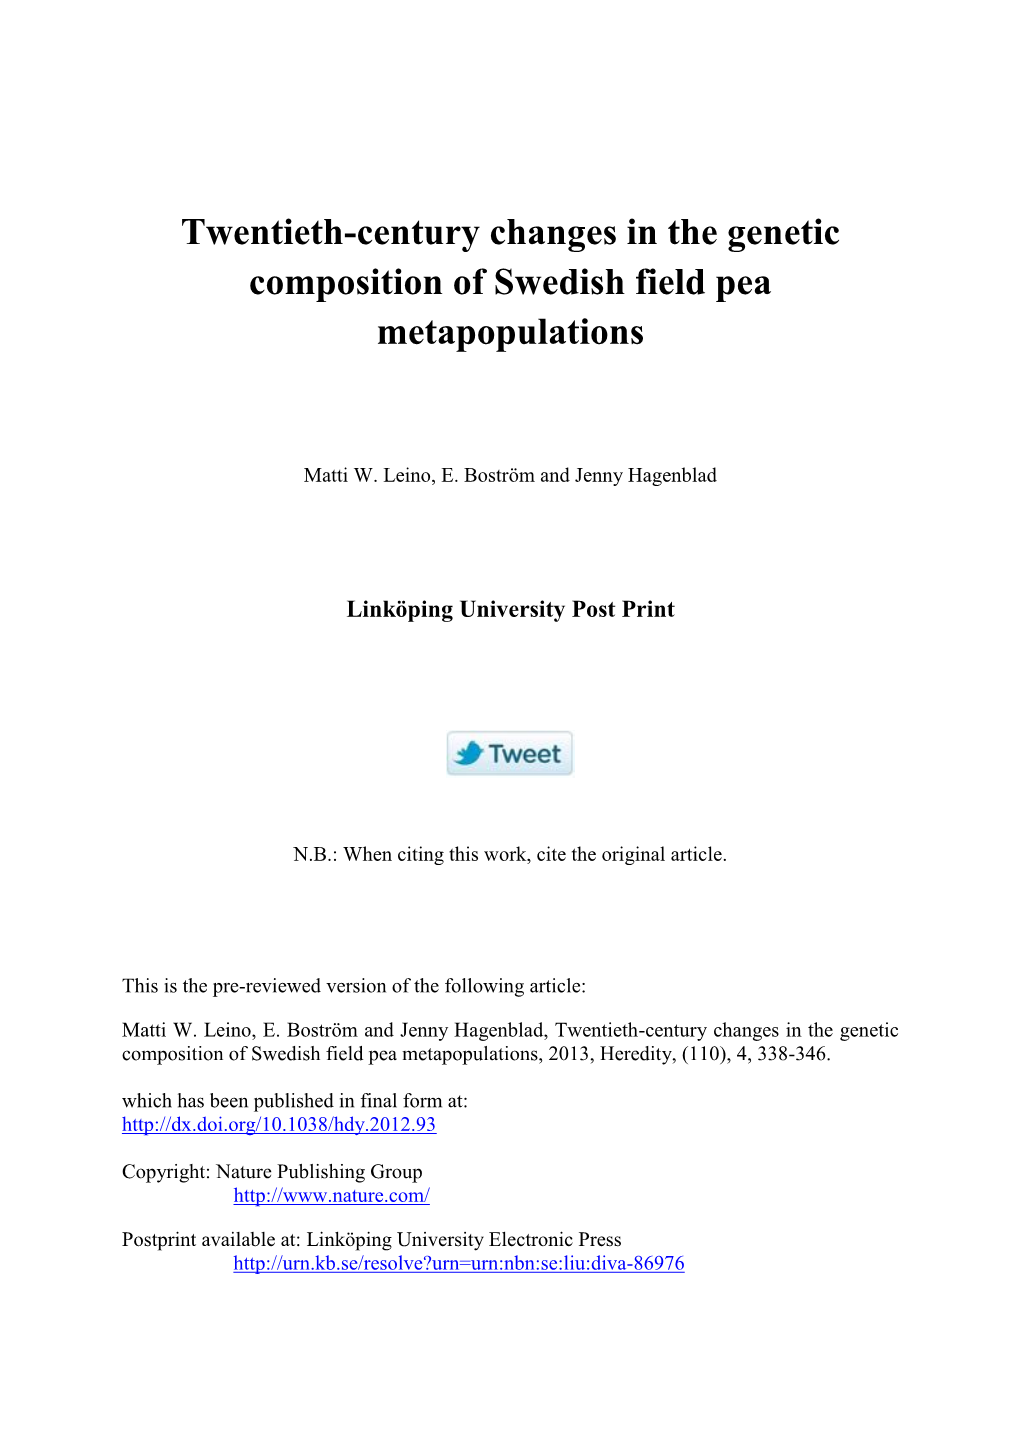 Twentieth-Century Changes in the Genetic Composition of Swedish Field Pea Metapopulations